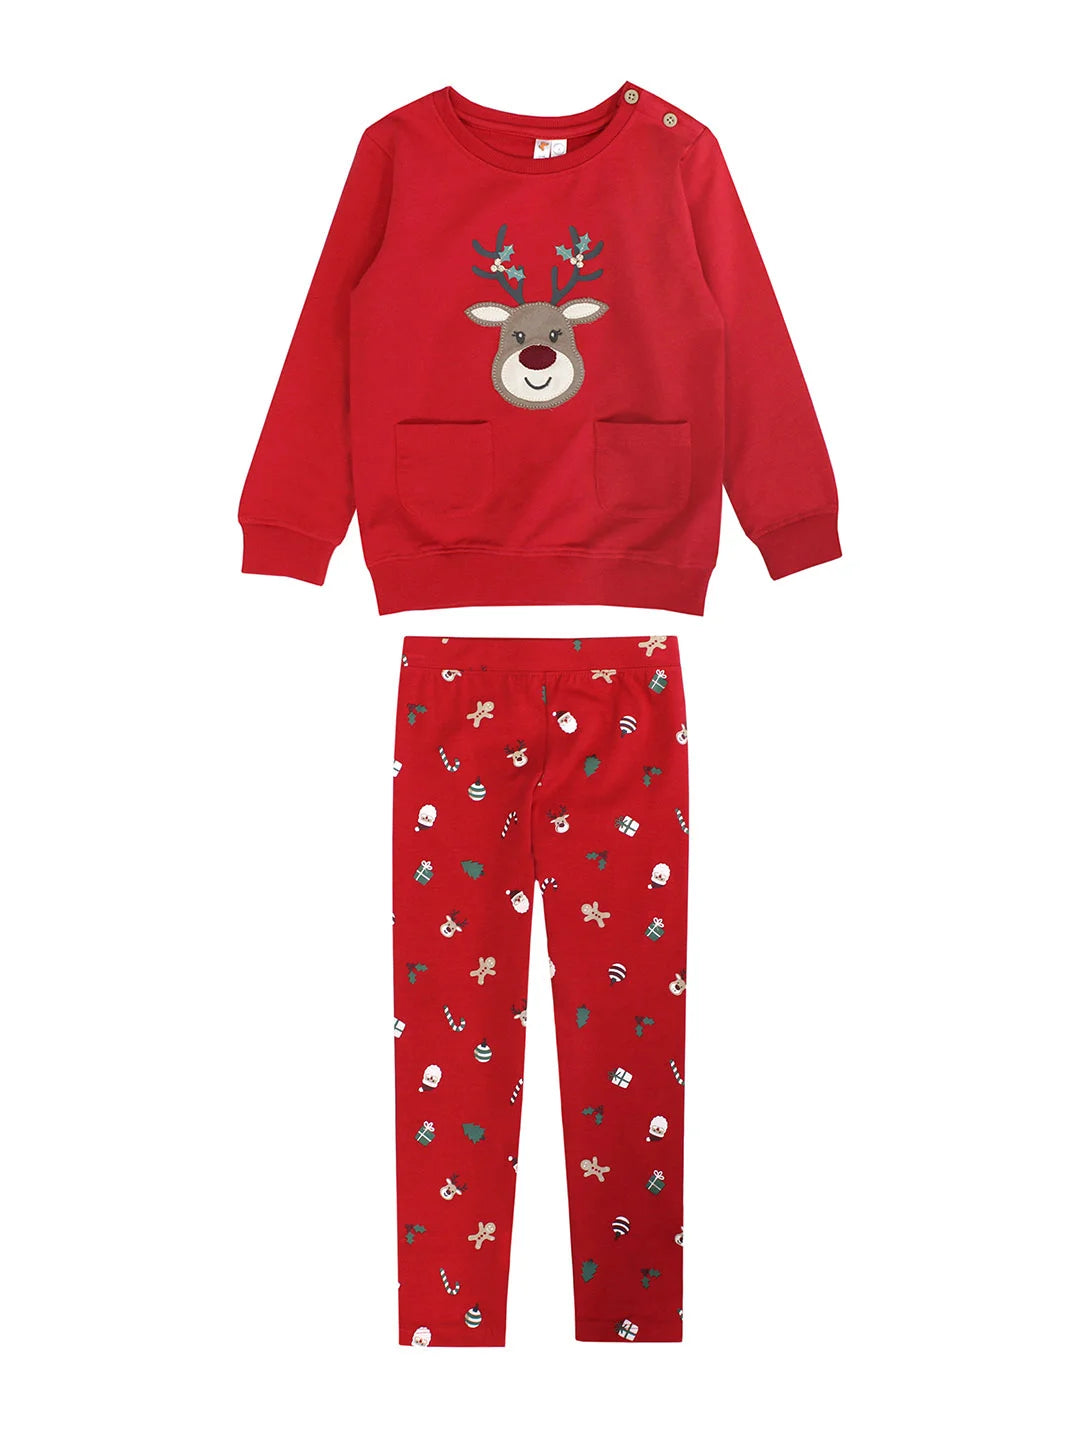 long sleeve red top with reindeer and christmas leggings